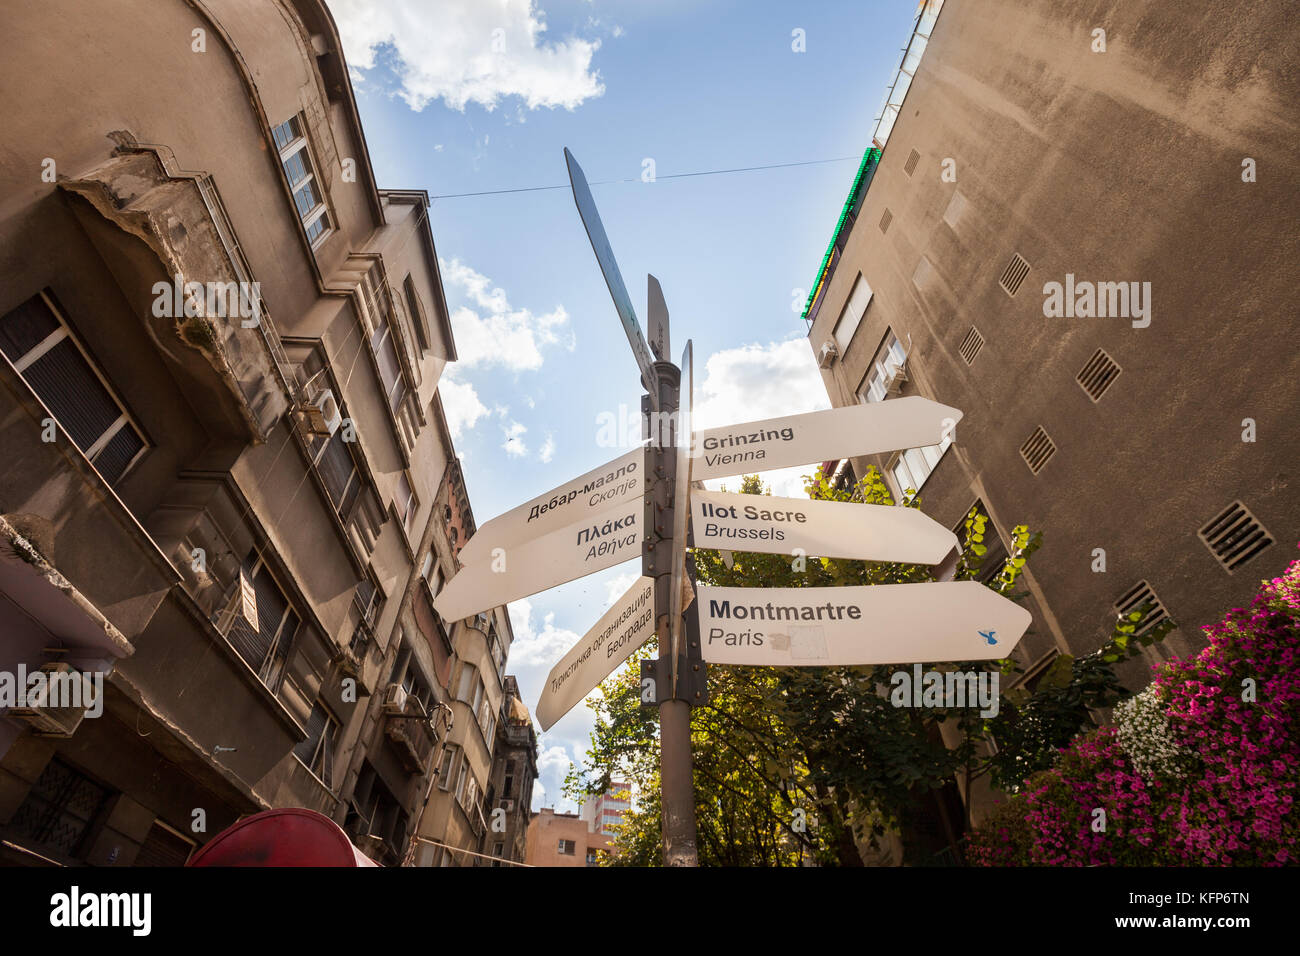 Signs to Grinzing, Montmartre, etc, Skadarlija (Skadarska) Street, Belgrade, Serbia Stock Photo